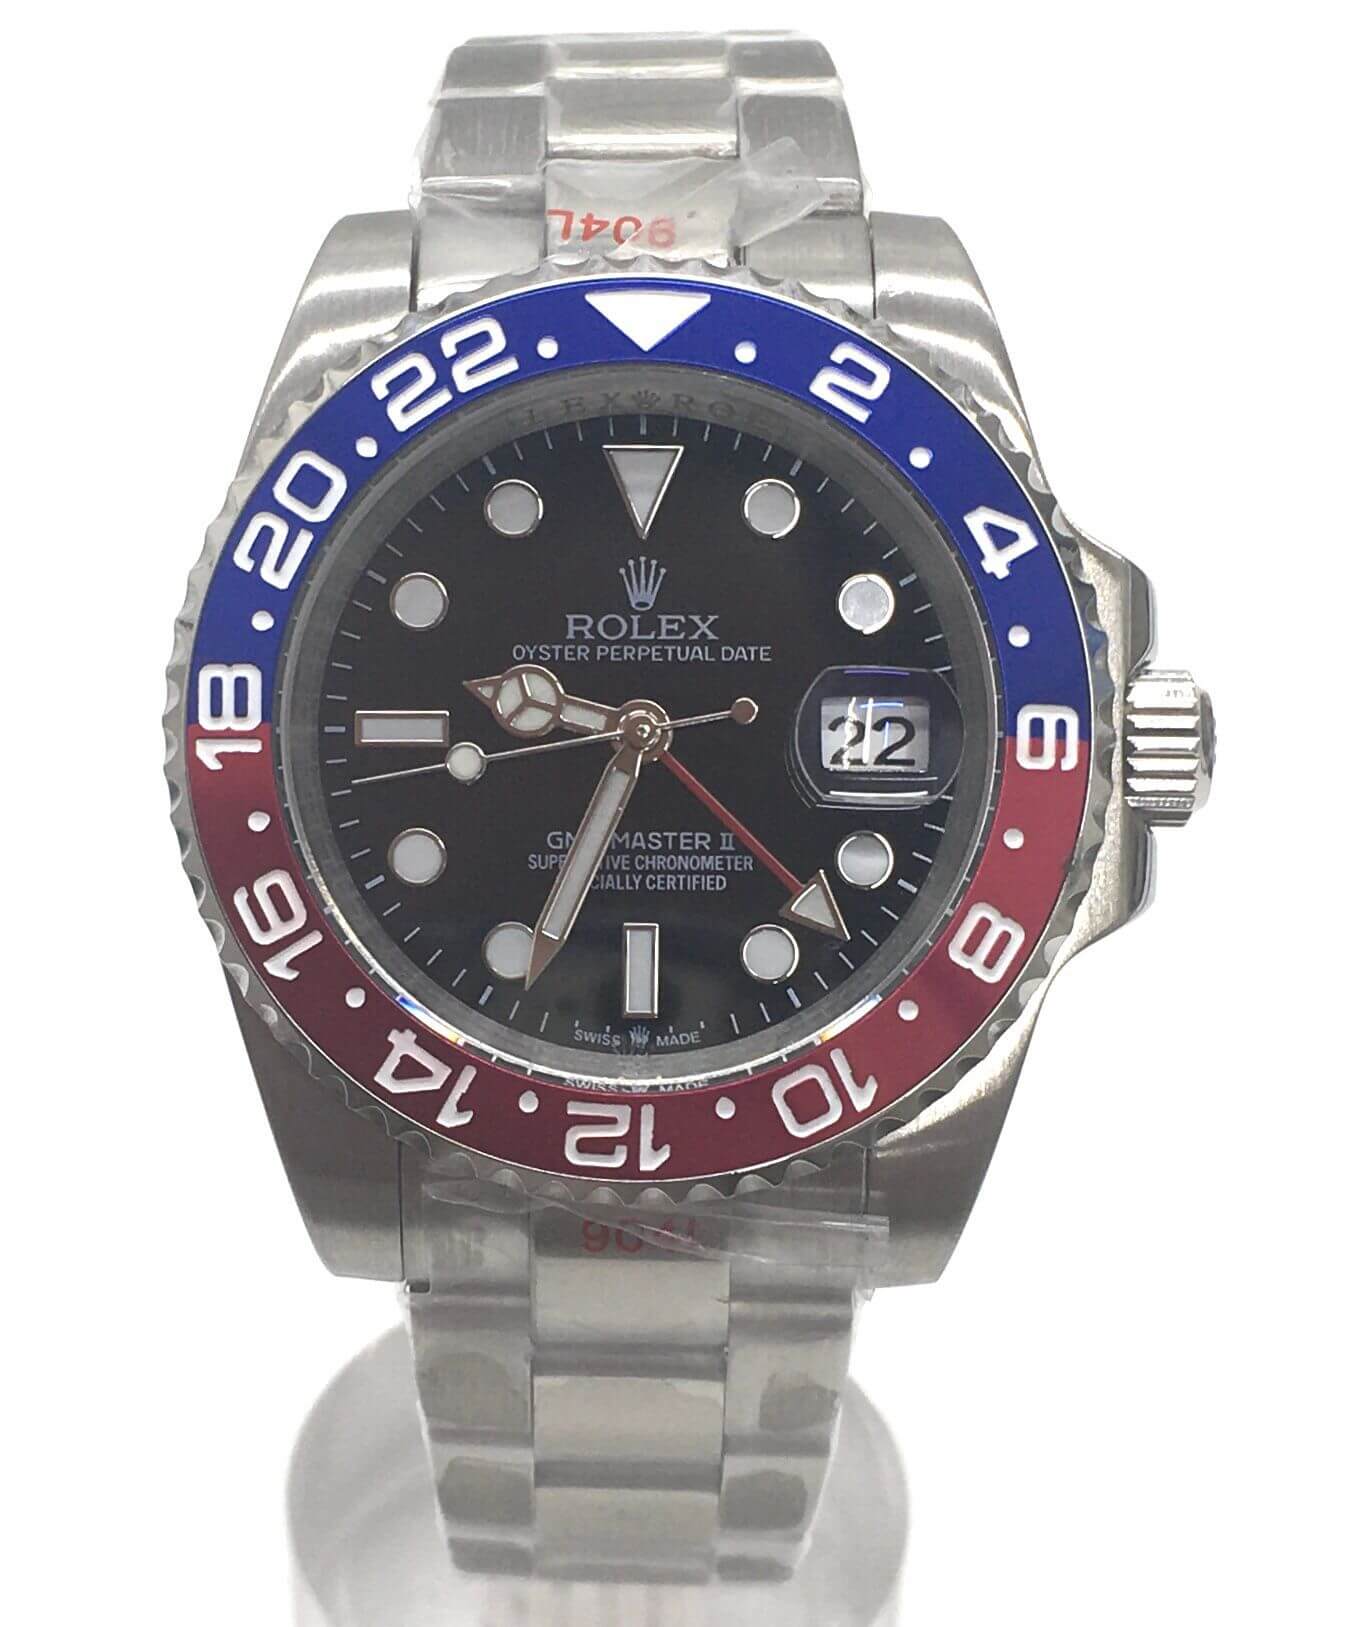 Fake Rolex GMT-MASTER II Pepsi watch in the UK